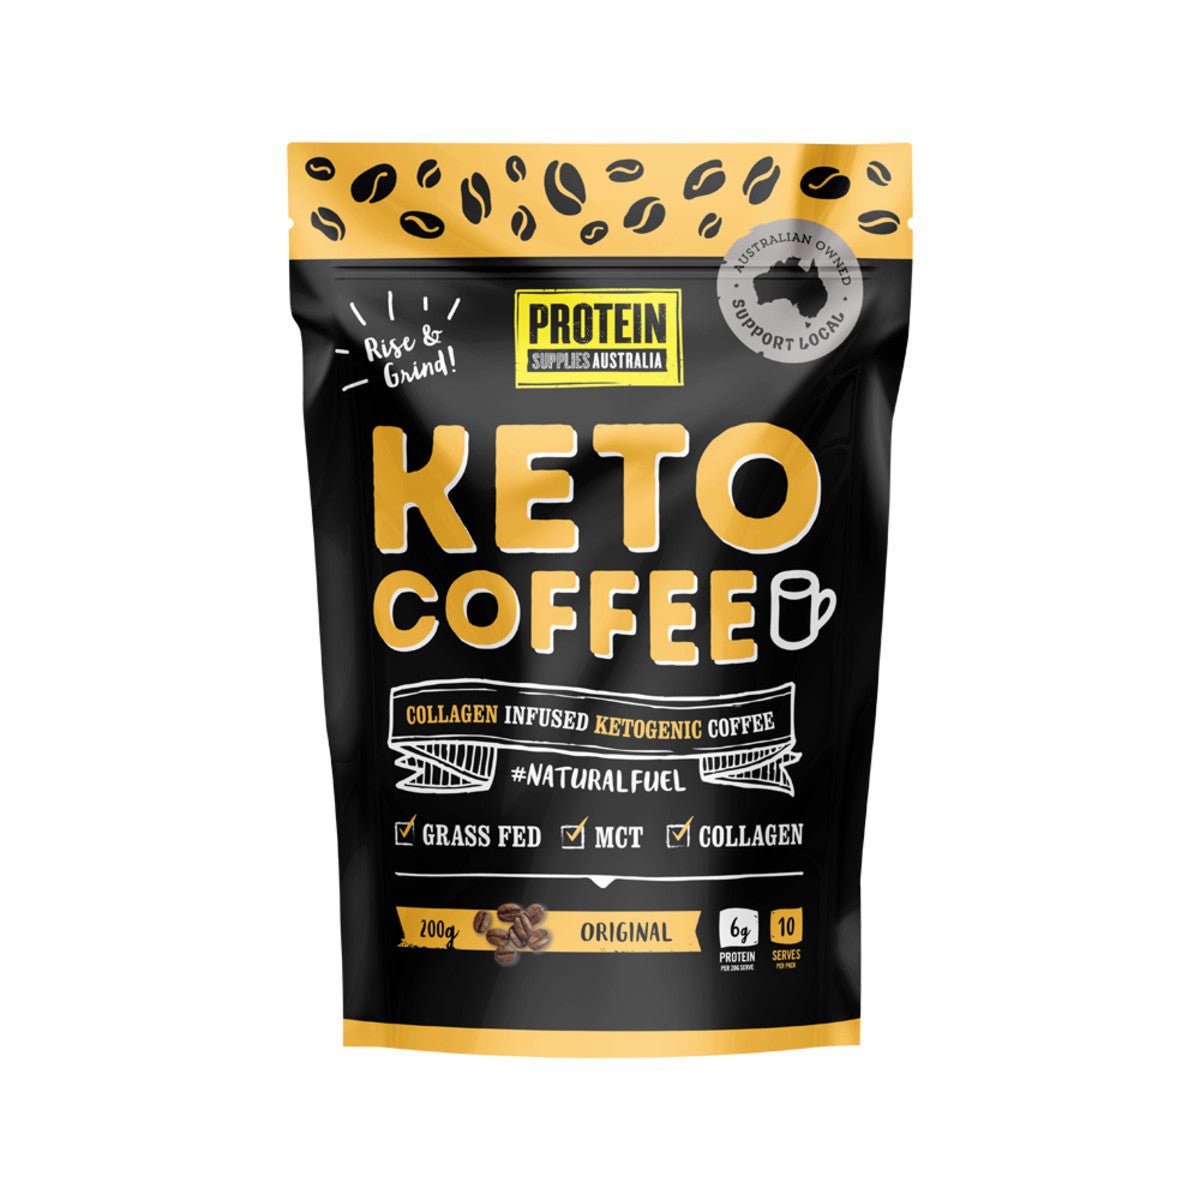 Keto Coffee - Yo Keto